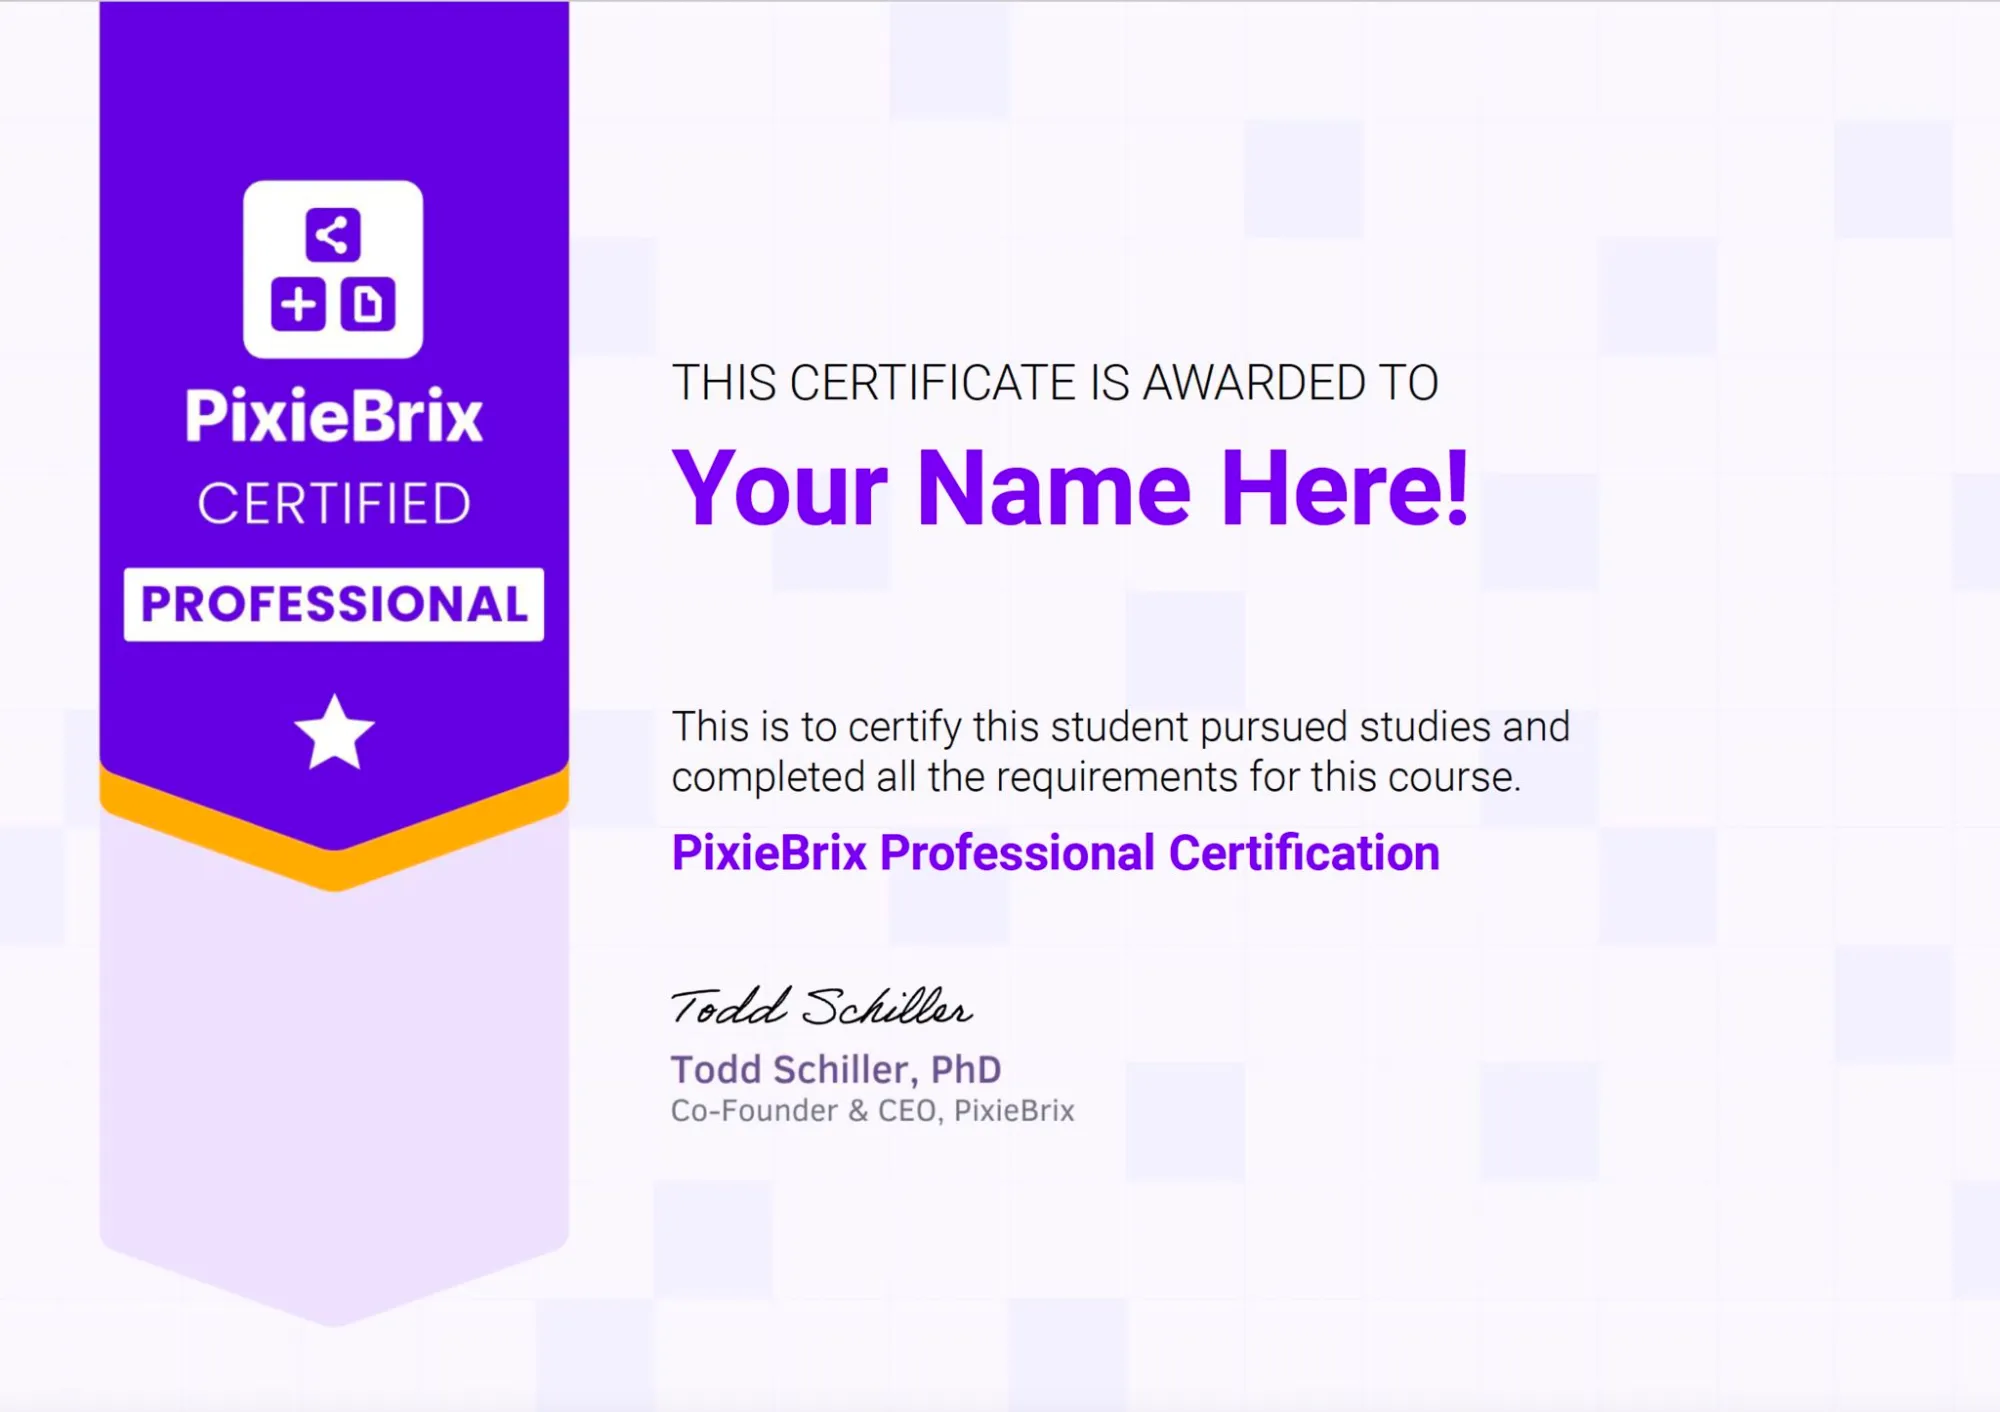 PixieBrix Professional Certification badge